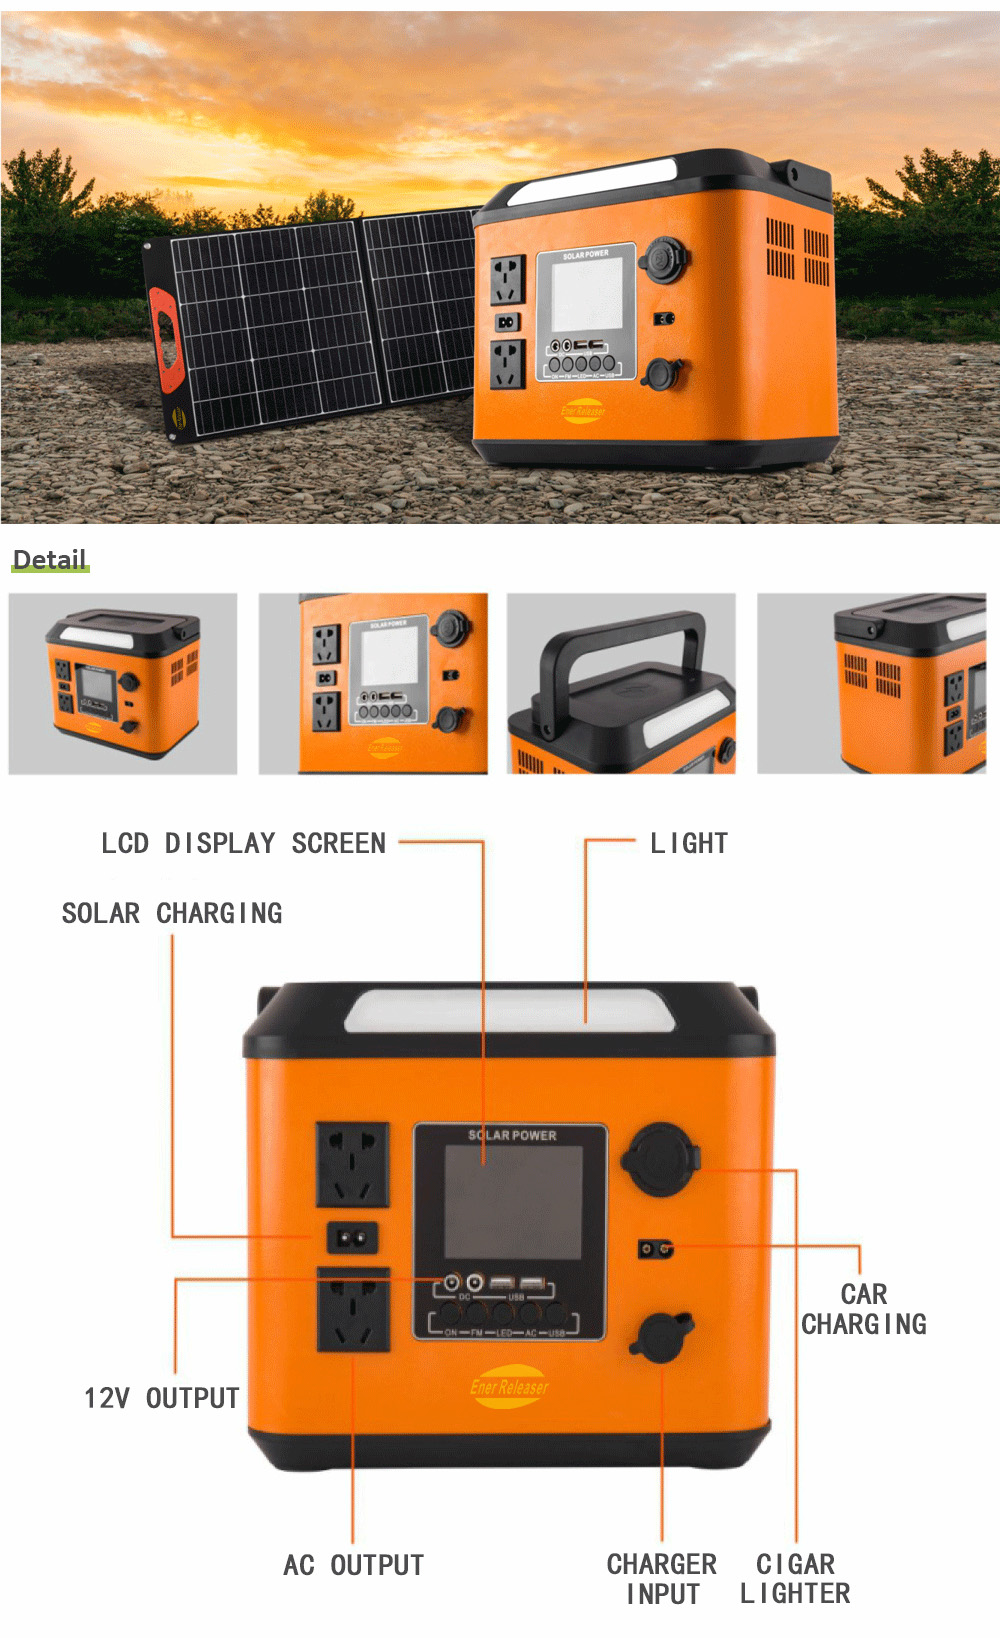 CES 2023: Jackery Reveals the Revolutionary New Portable Solar Generators, Leading the Solar Power Generation Industry